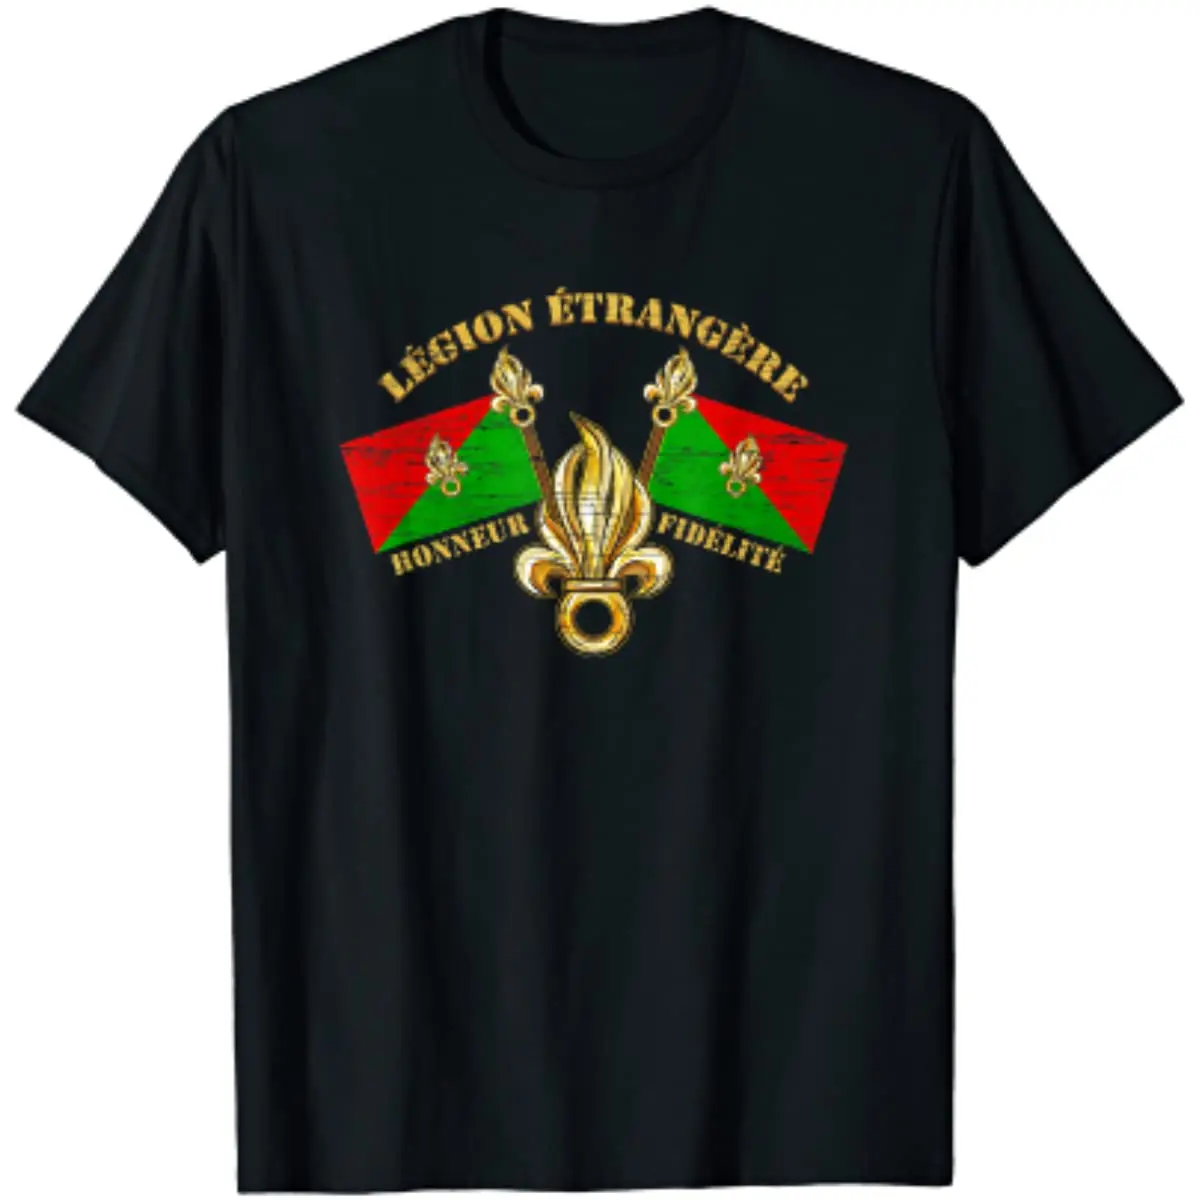 

Legion Etrangere Honneur Fidelite French Foreign Legion Men T-Shirt Short Sleeve Casual 100% Cotton O-Neck Summer Shirts